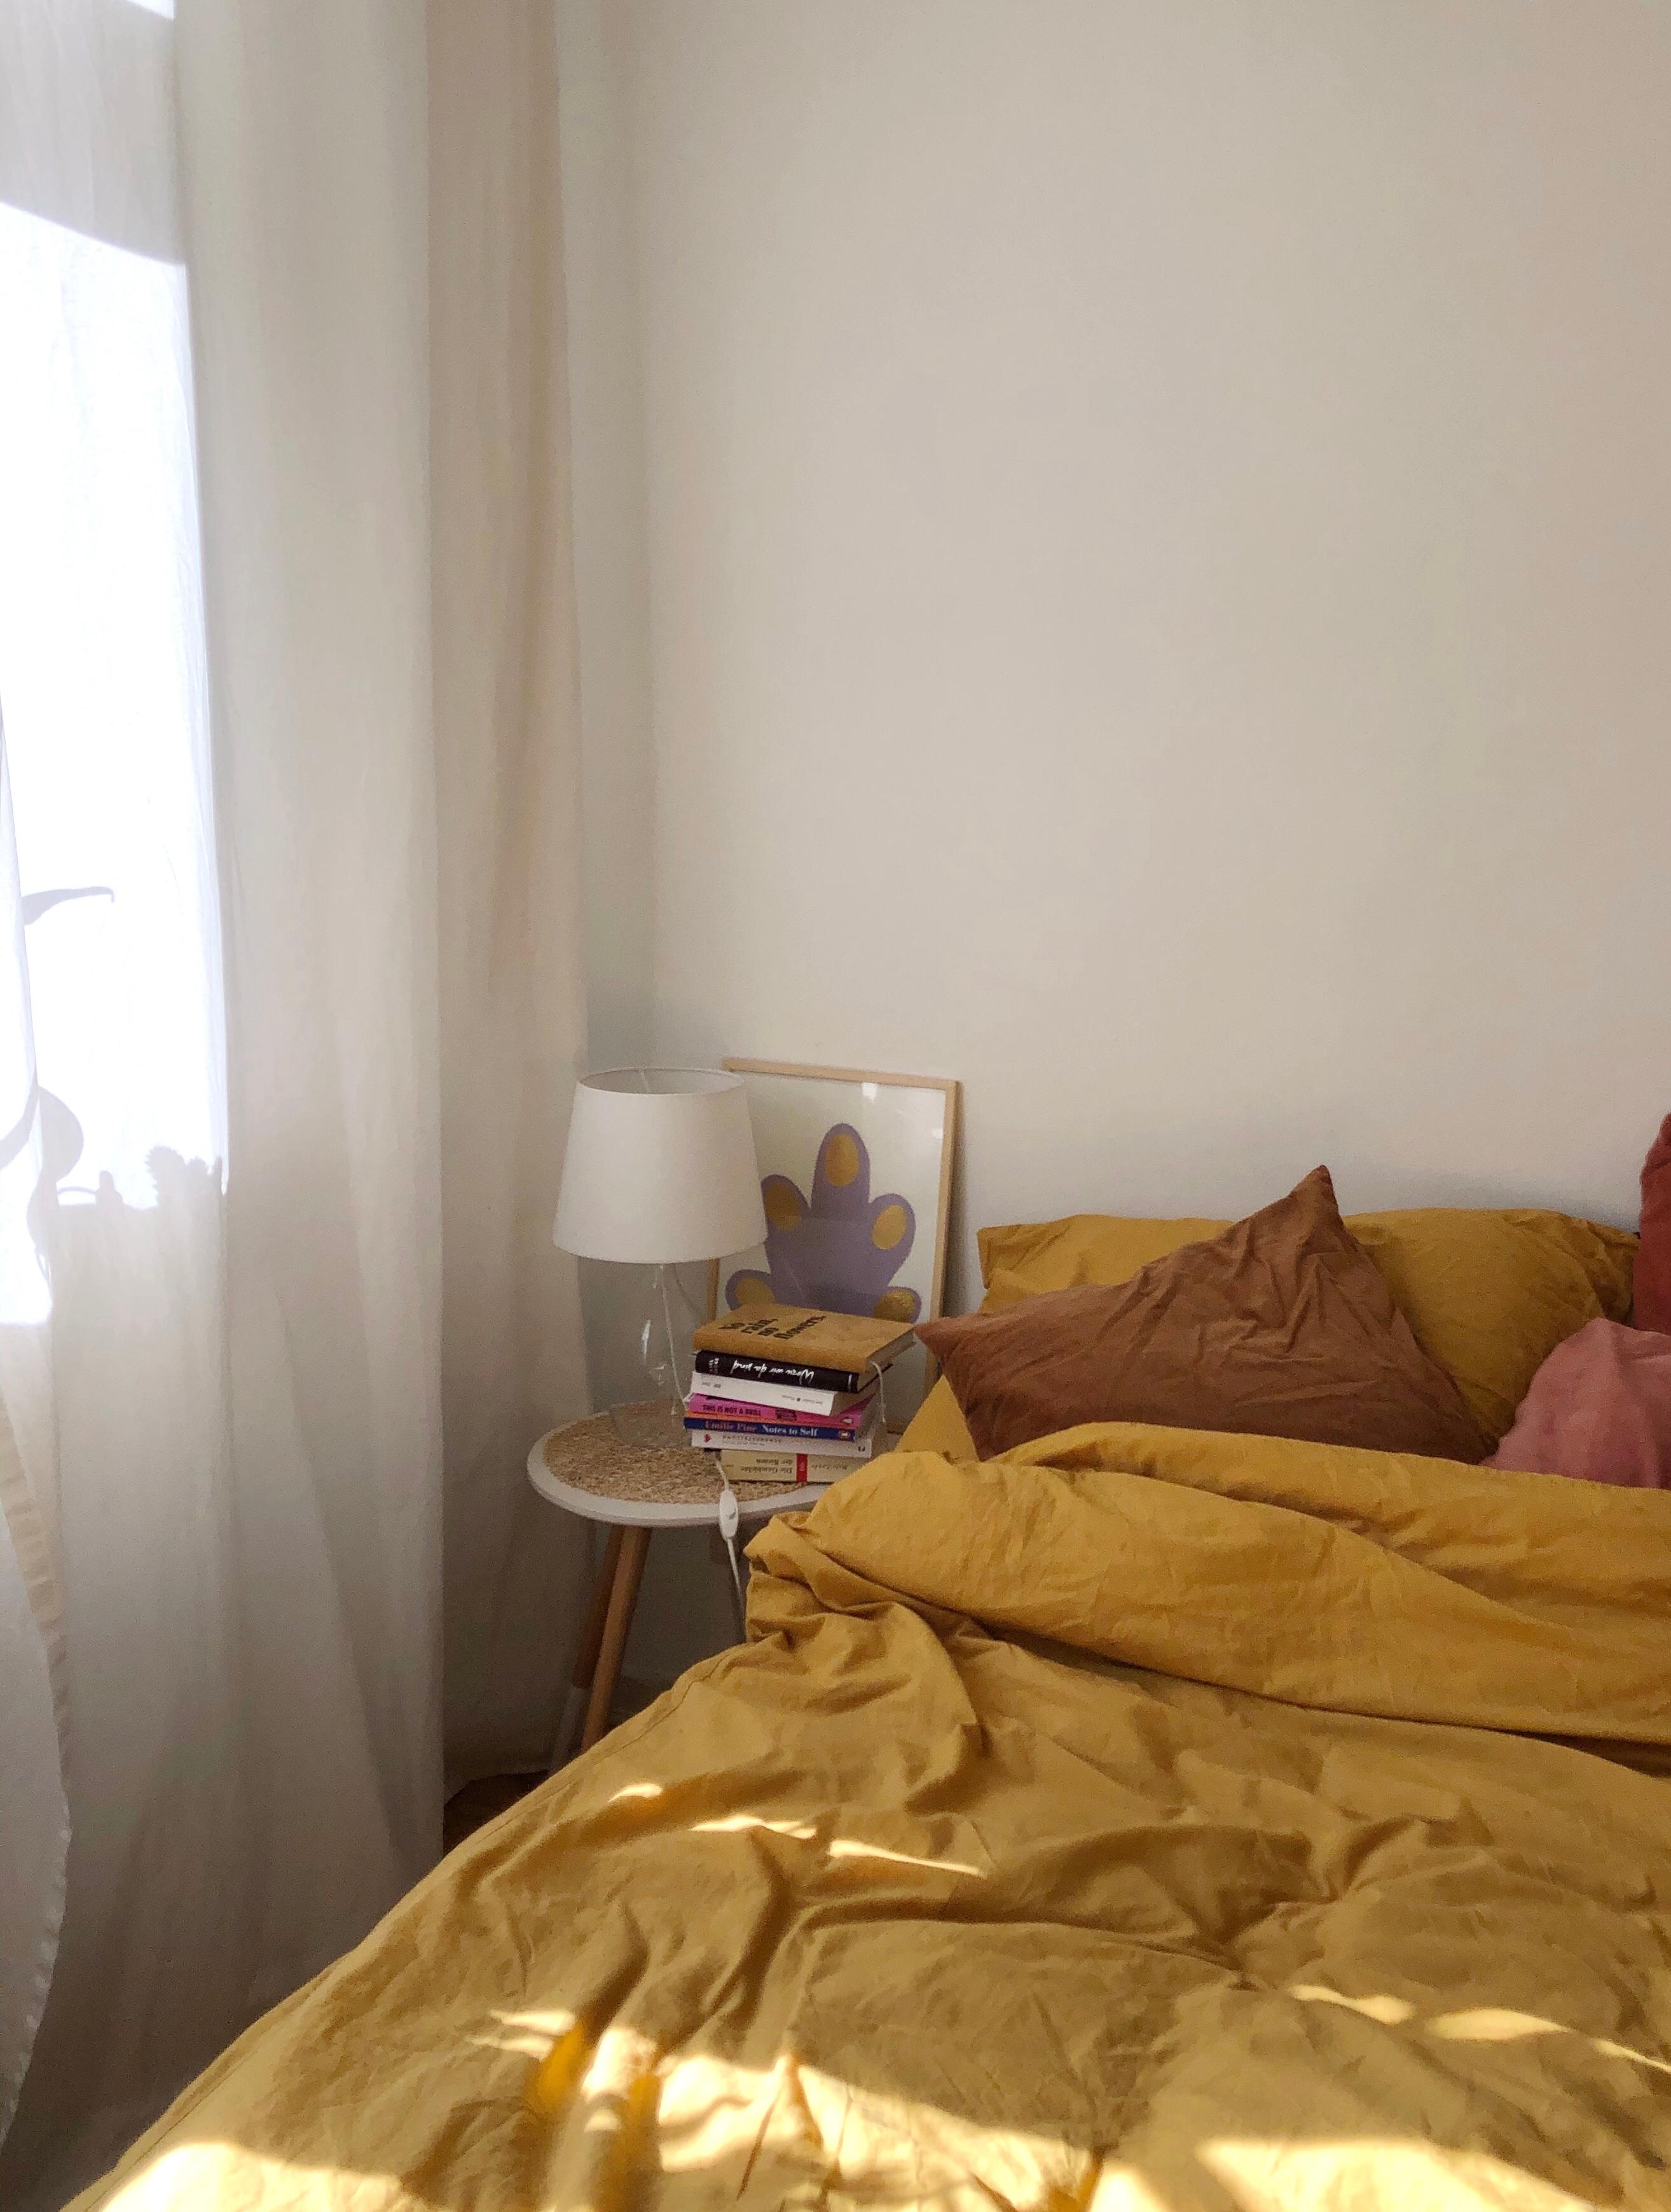 Hey sun! 🌞 #bedroom #sun #interior #altbau